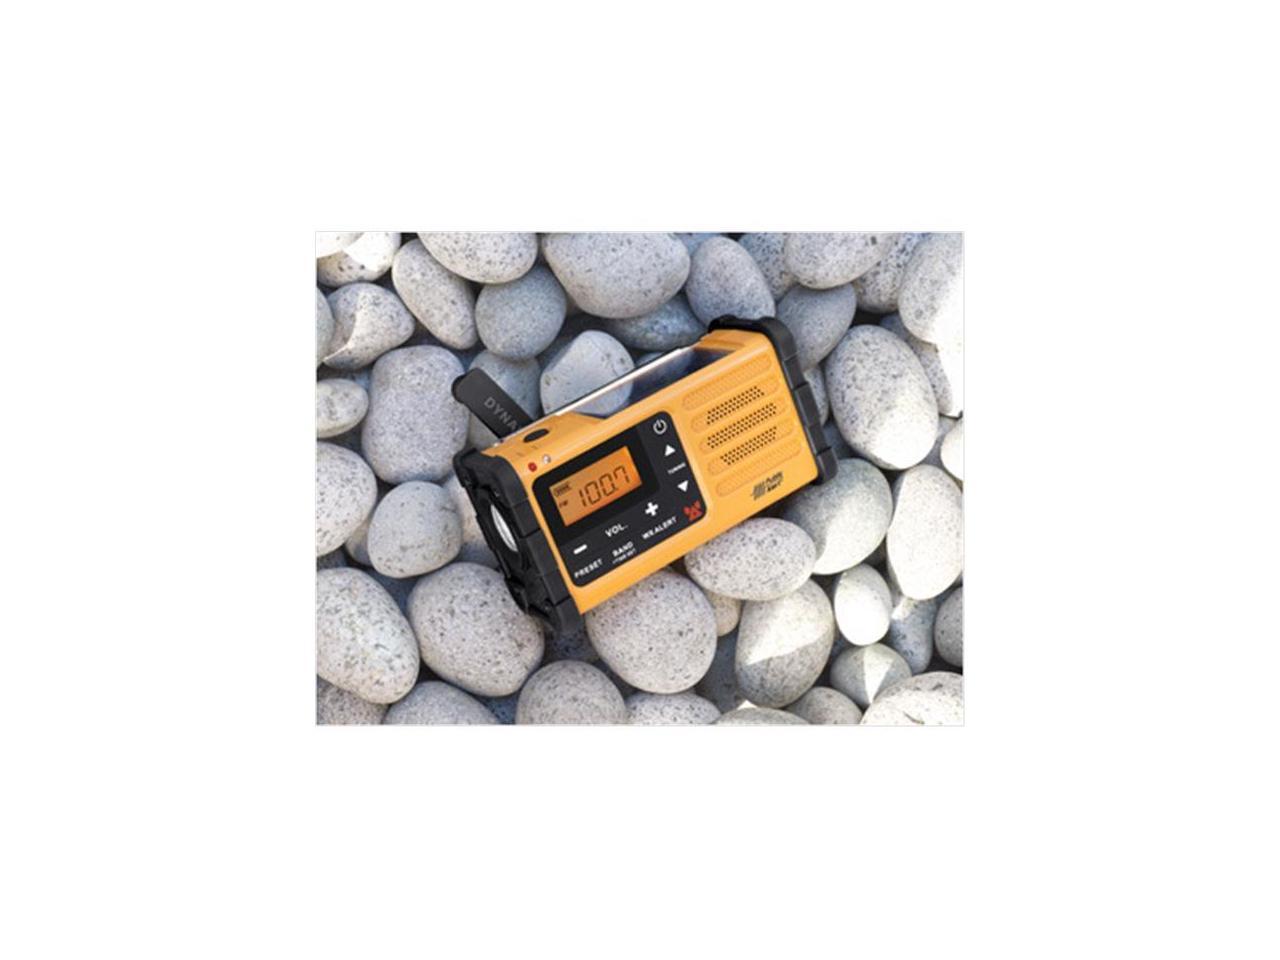 Sangean Portable Emergency Radios, Yellow, MMR-88 - image 4 of 18